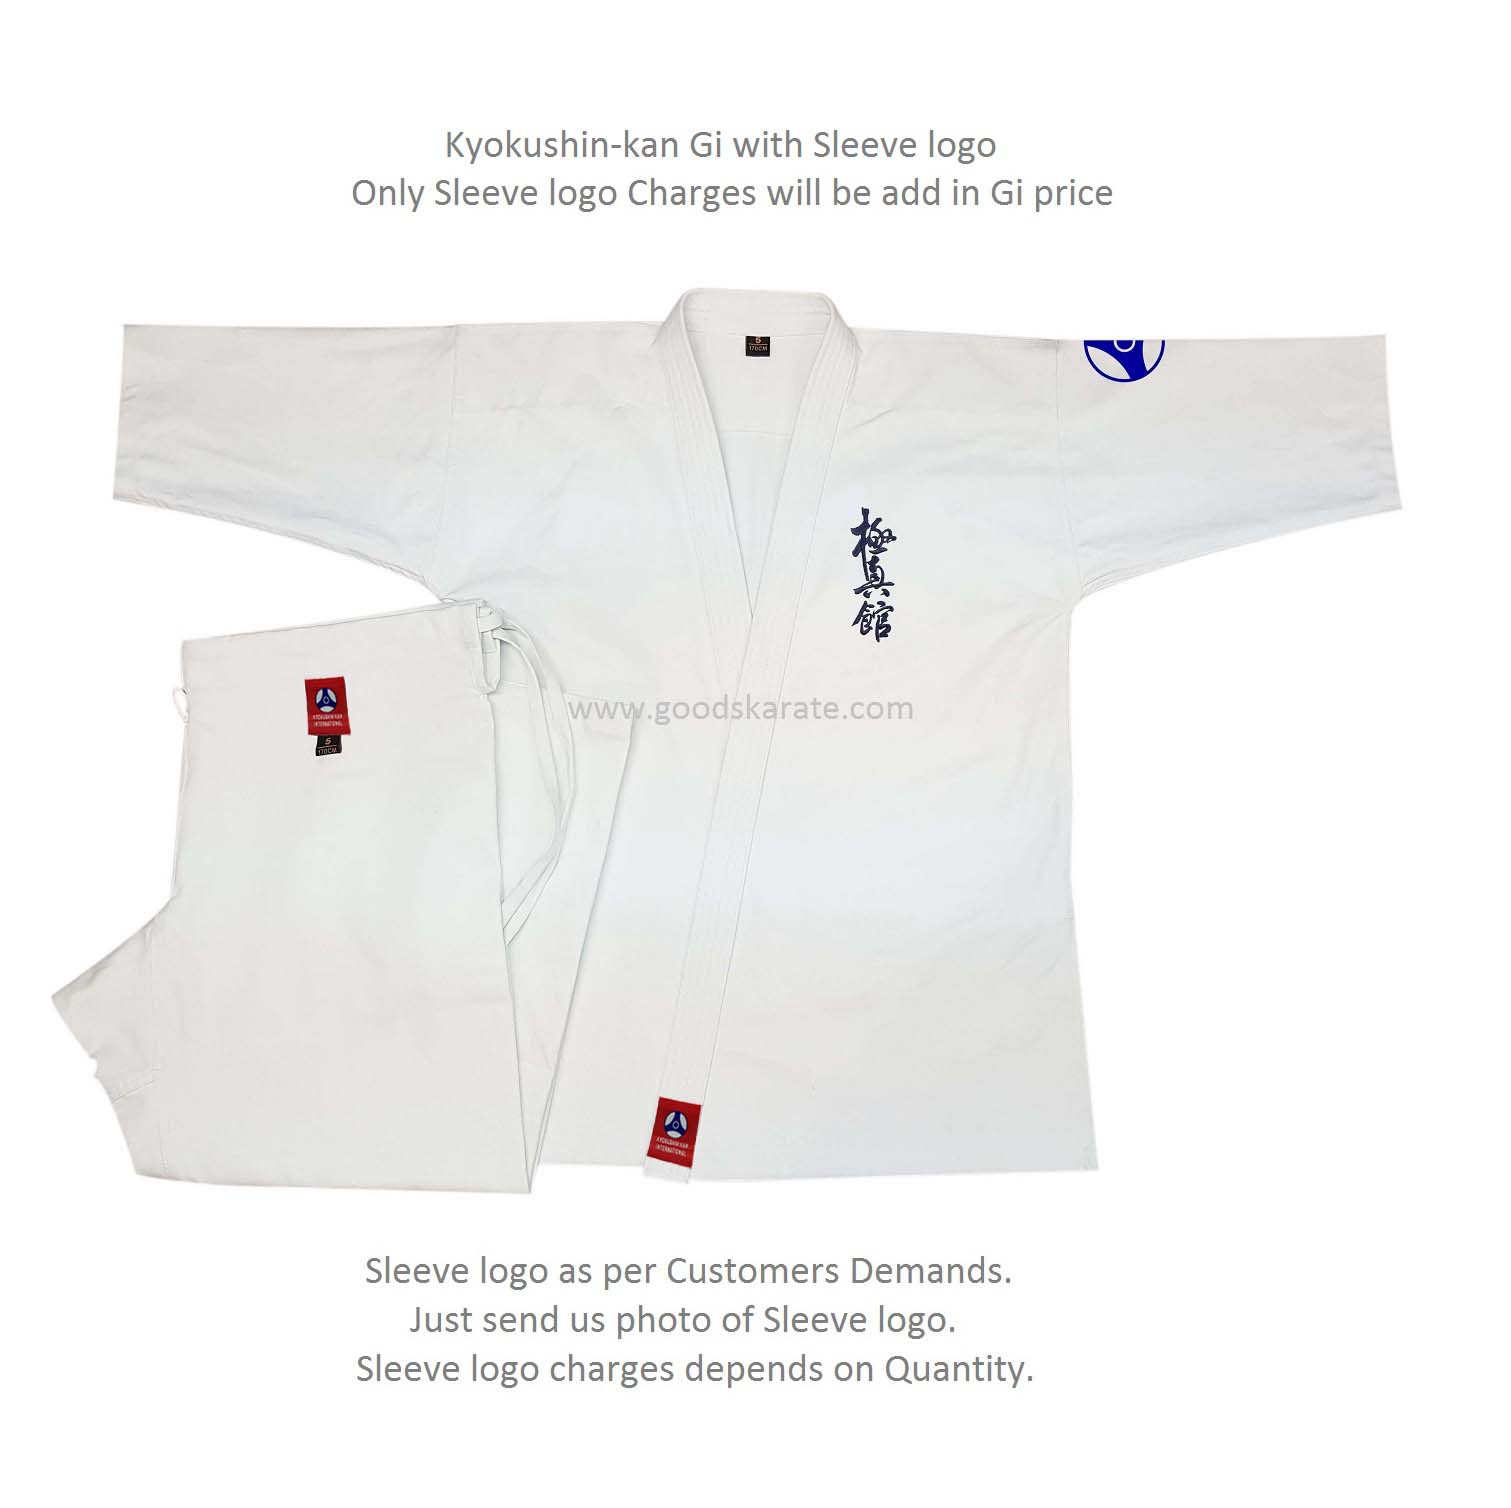 Kyokushin-kan Gi with Sleeve logo